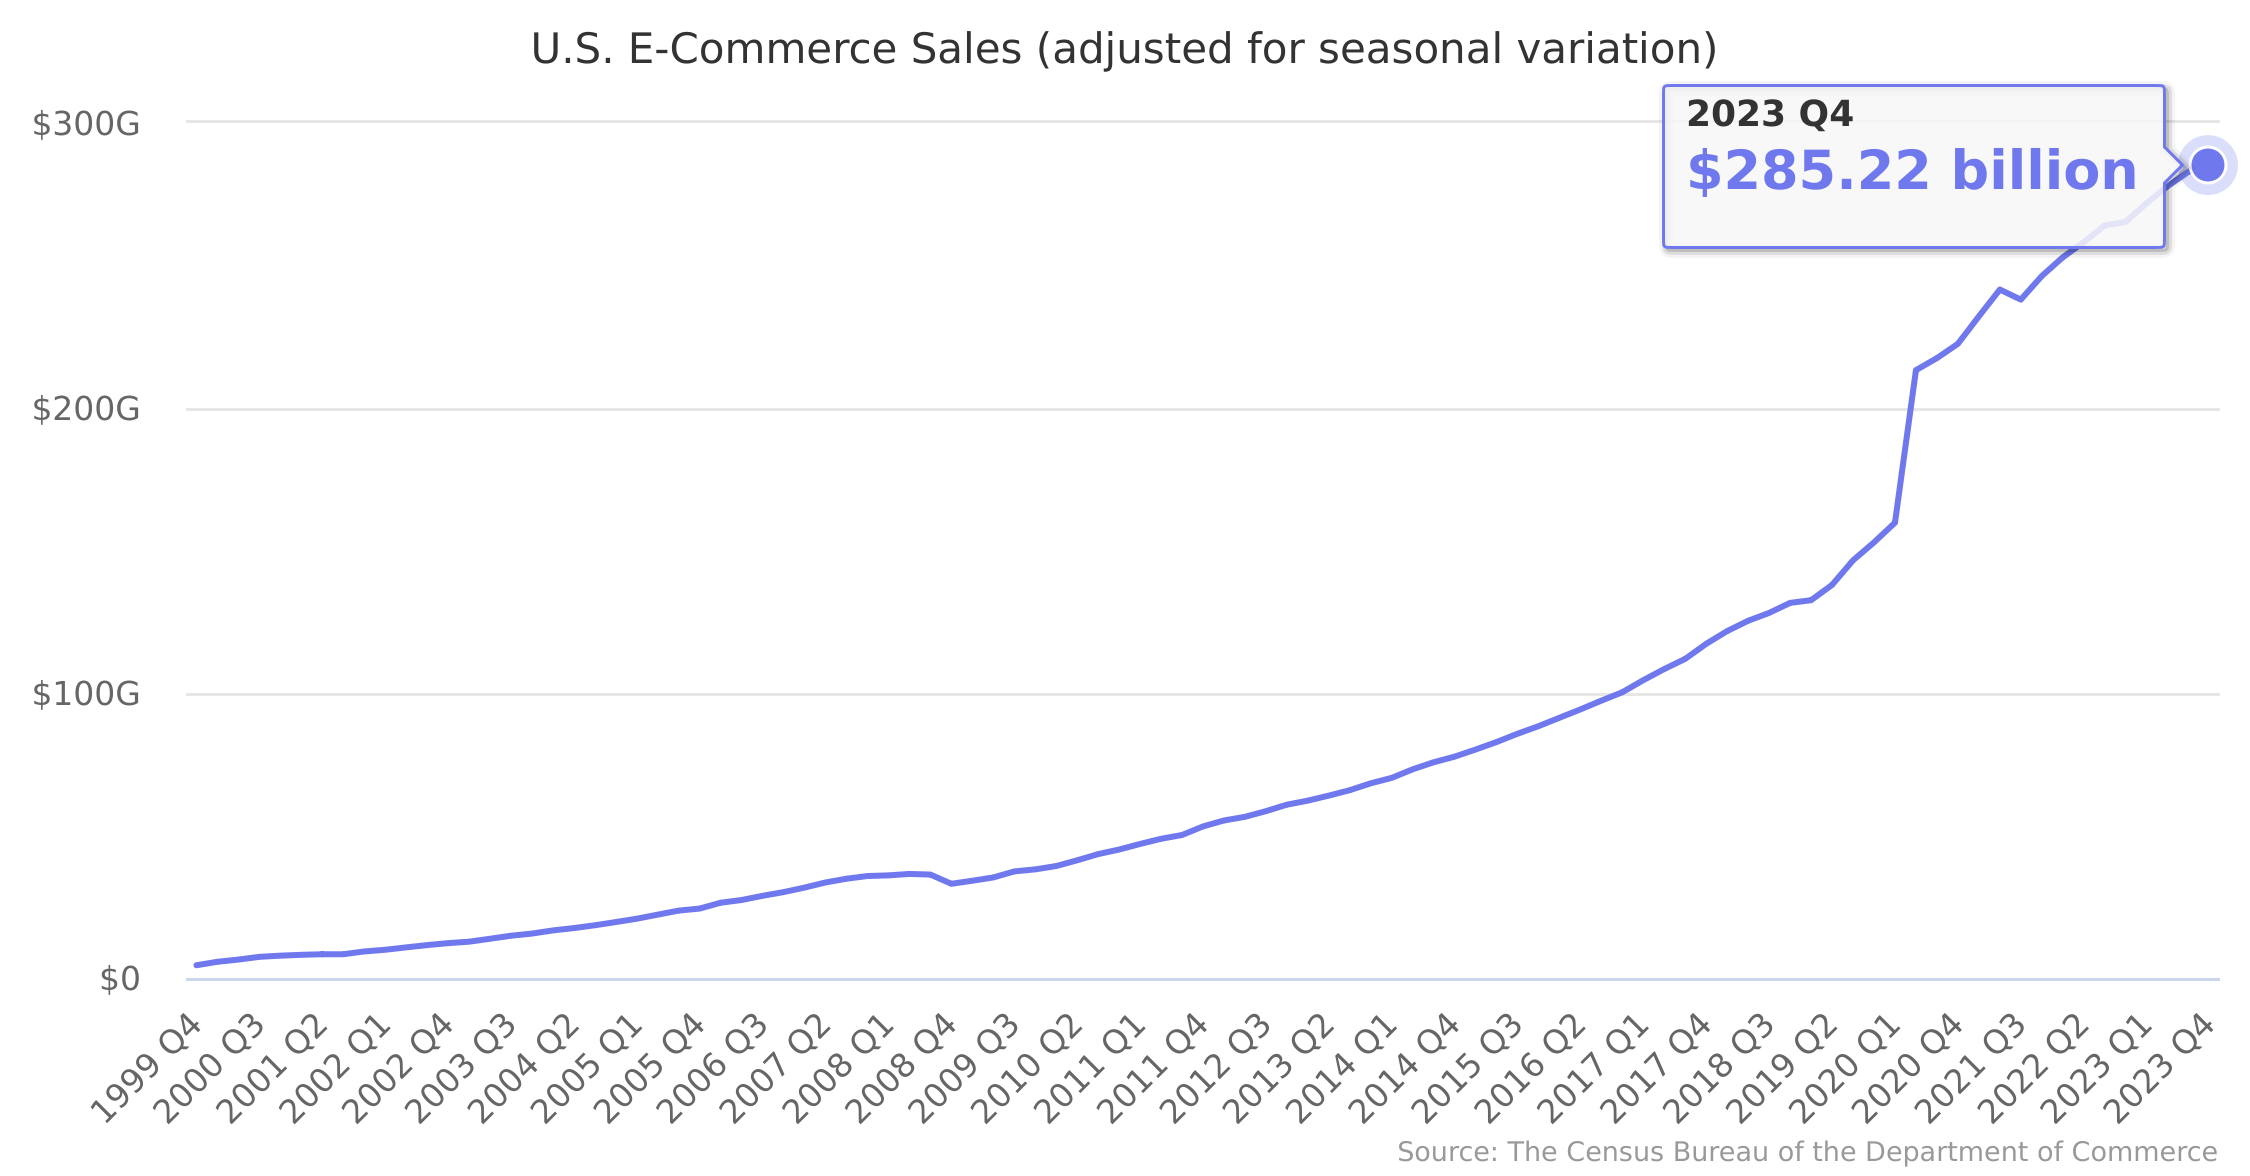 U.S. E-Commerce Sales 1999-2022